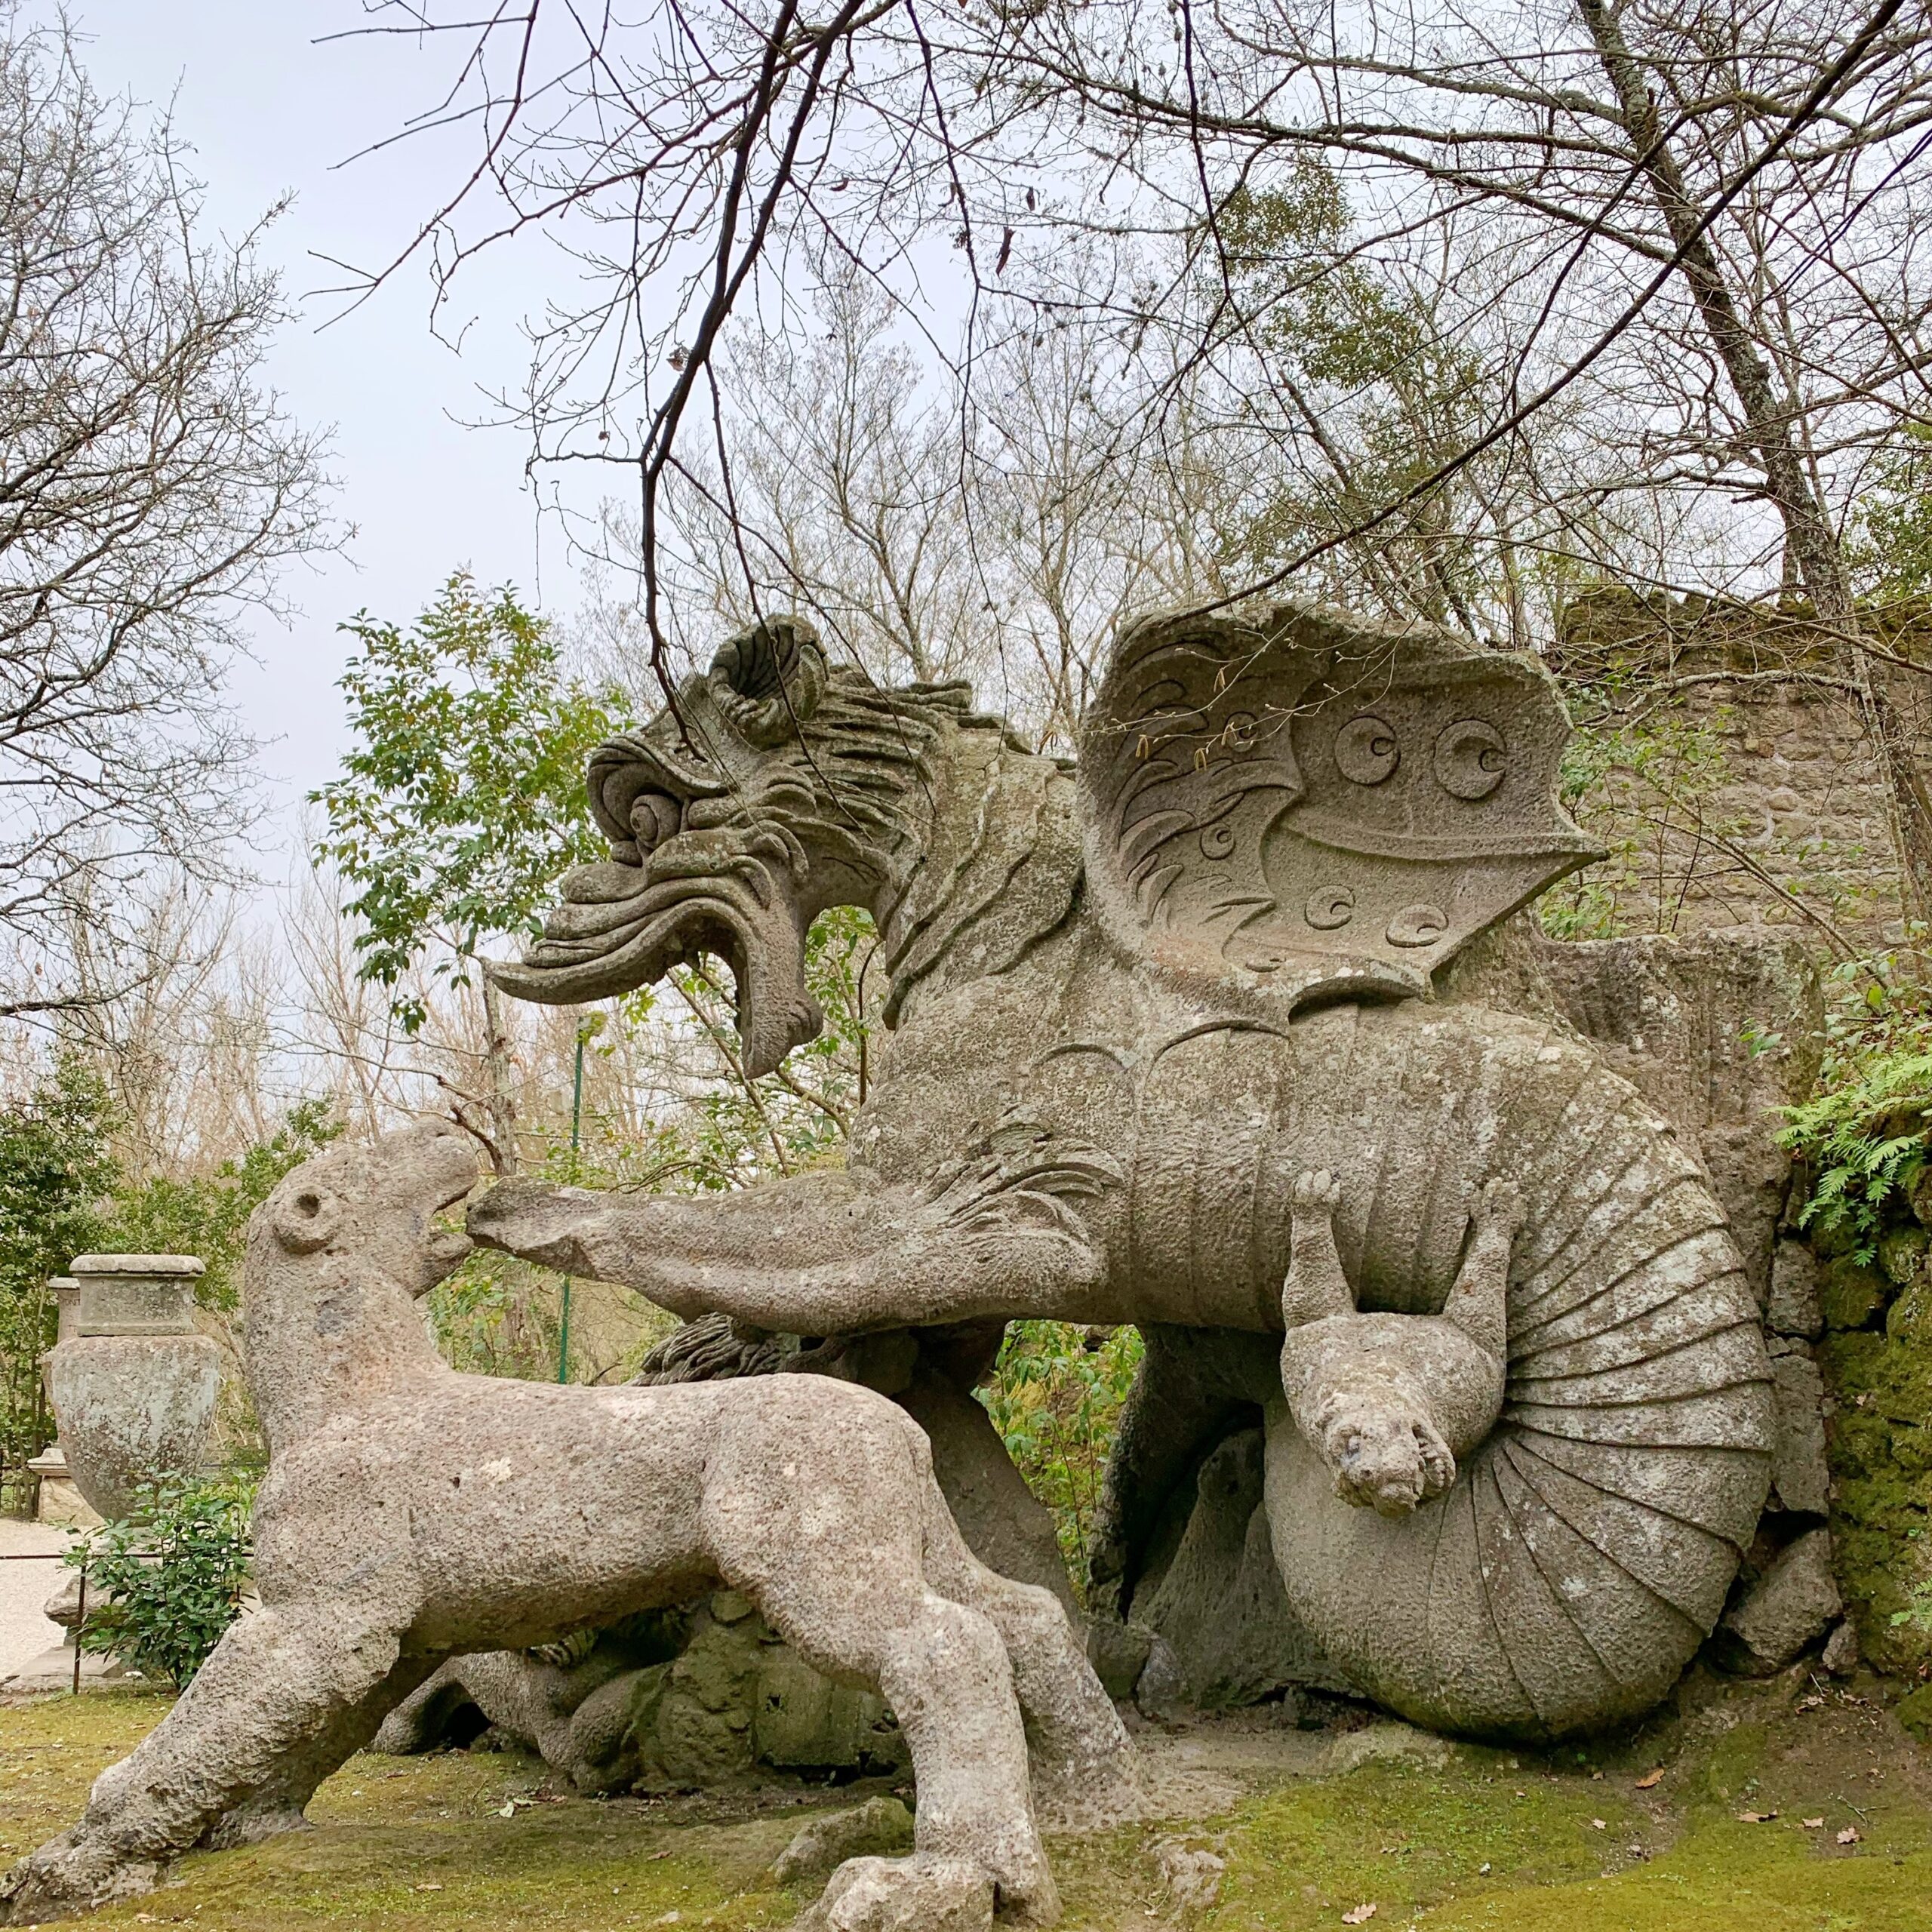 Sacro bosco rome dragon